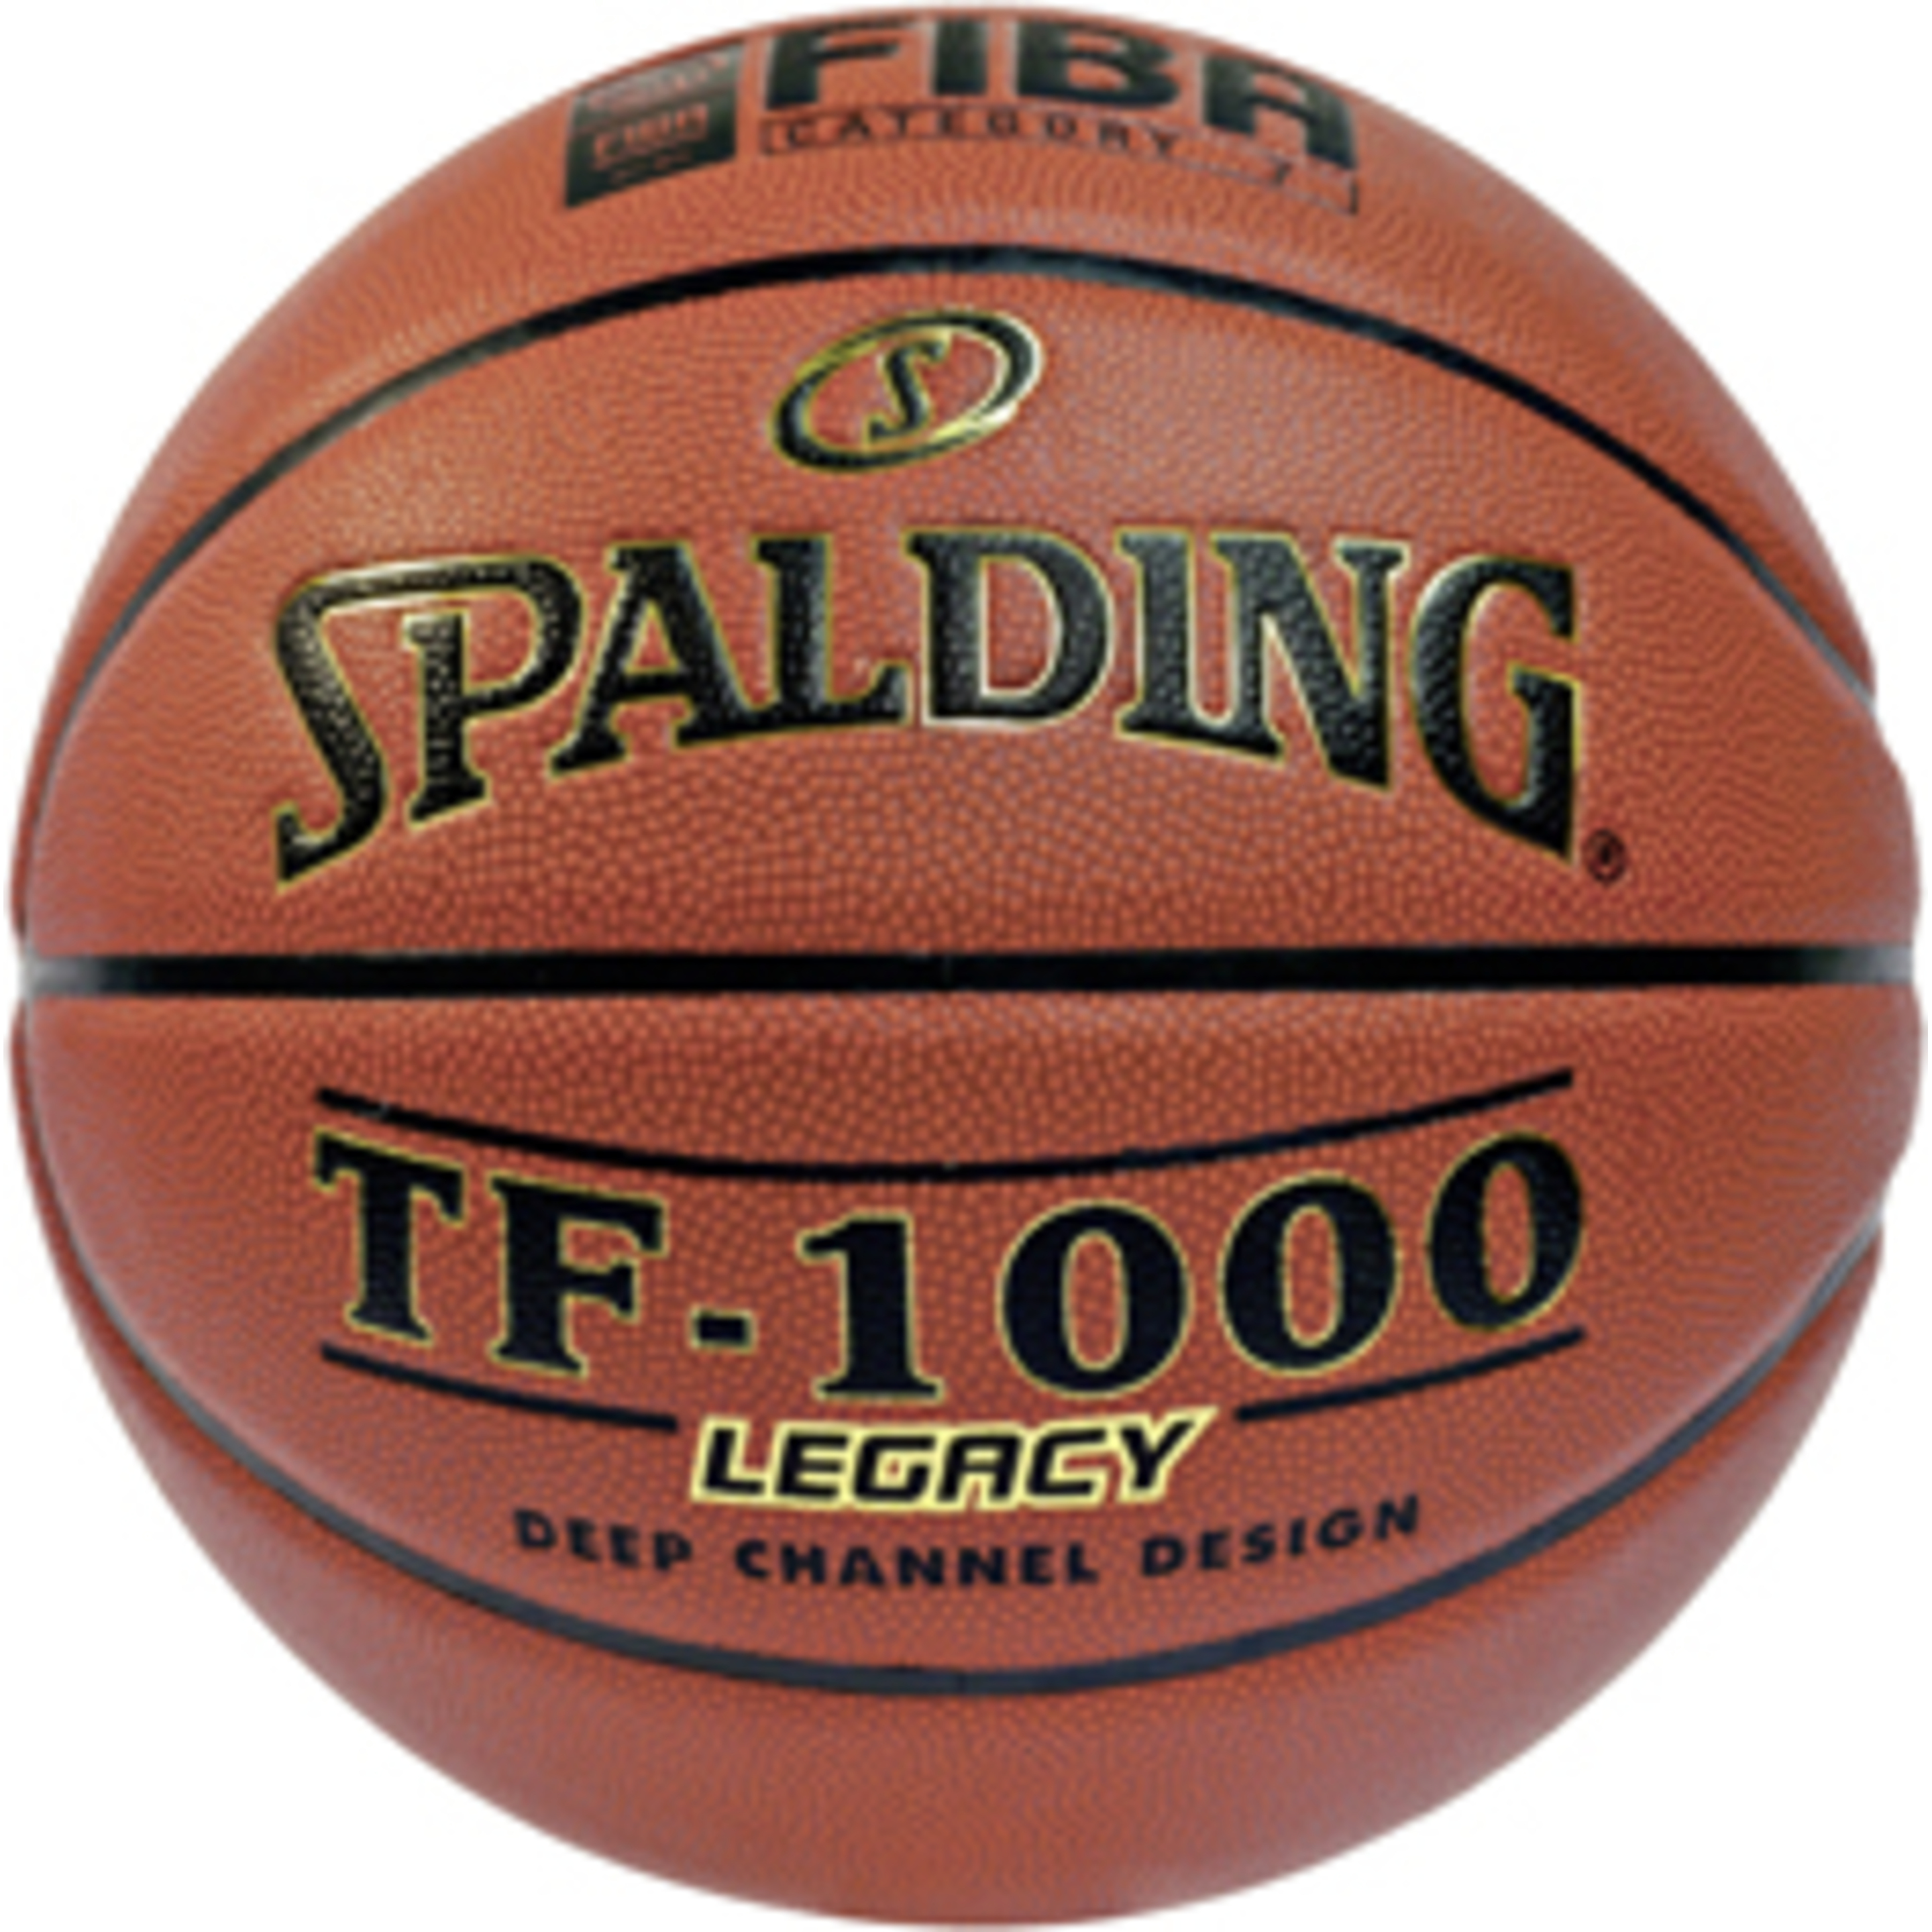 Balón Spalding Tf 1000 Legacy Indoor